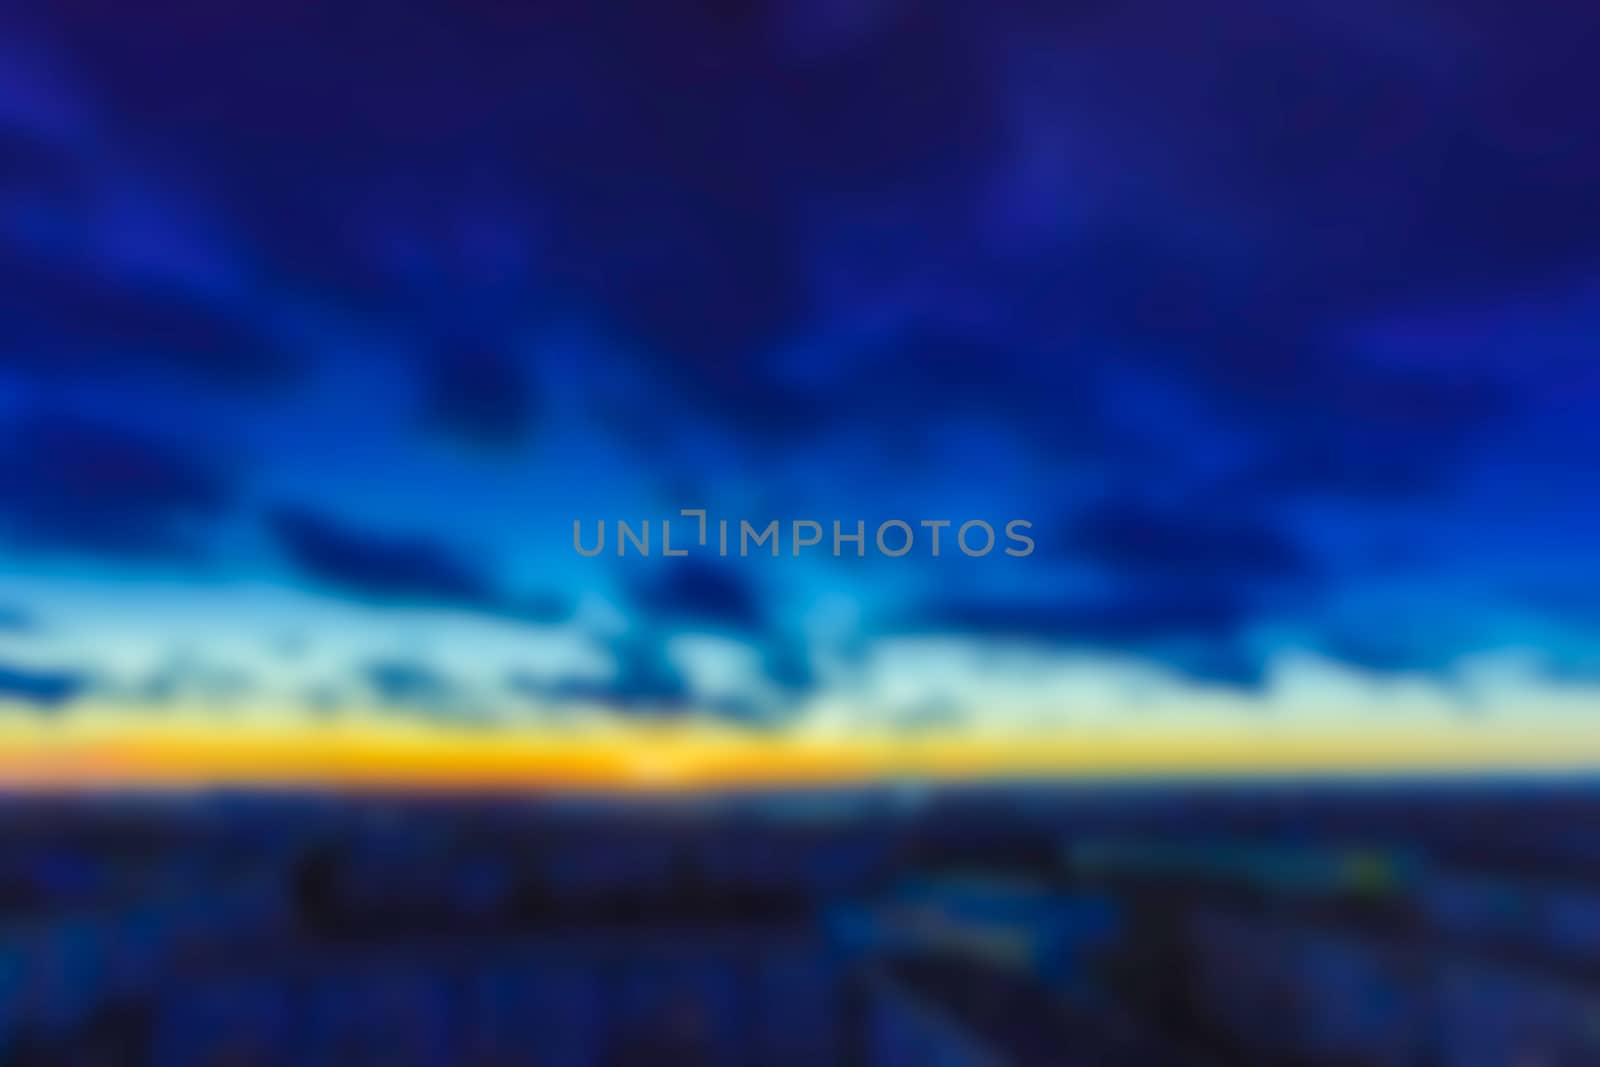 Sky clouds - blurred image by sengnsp